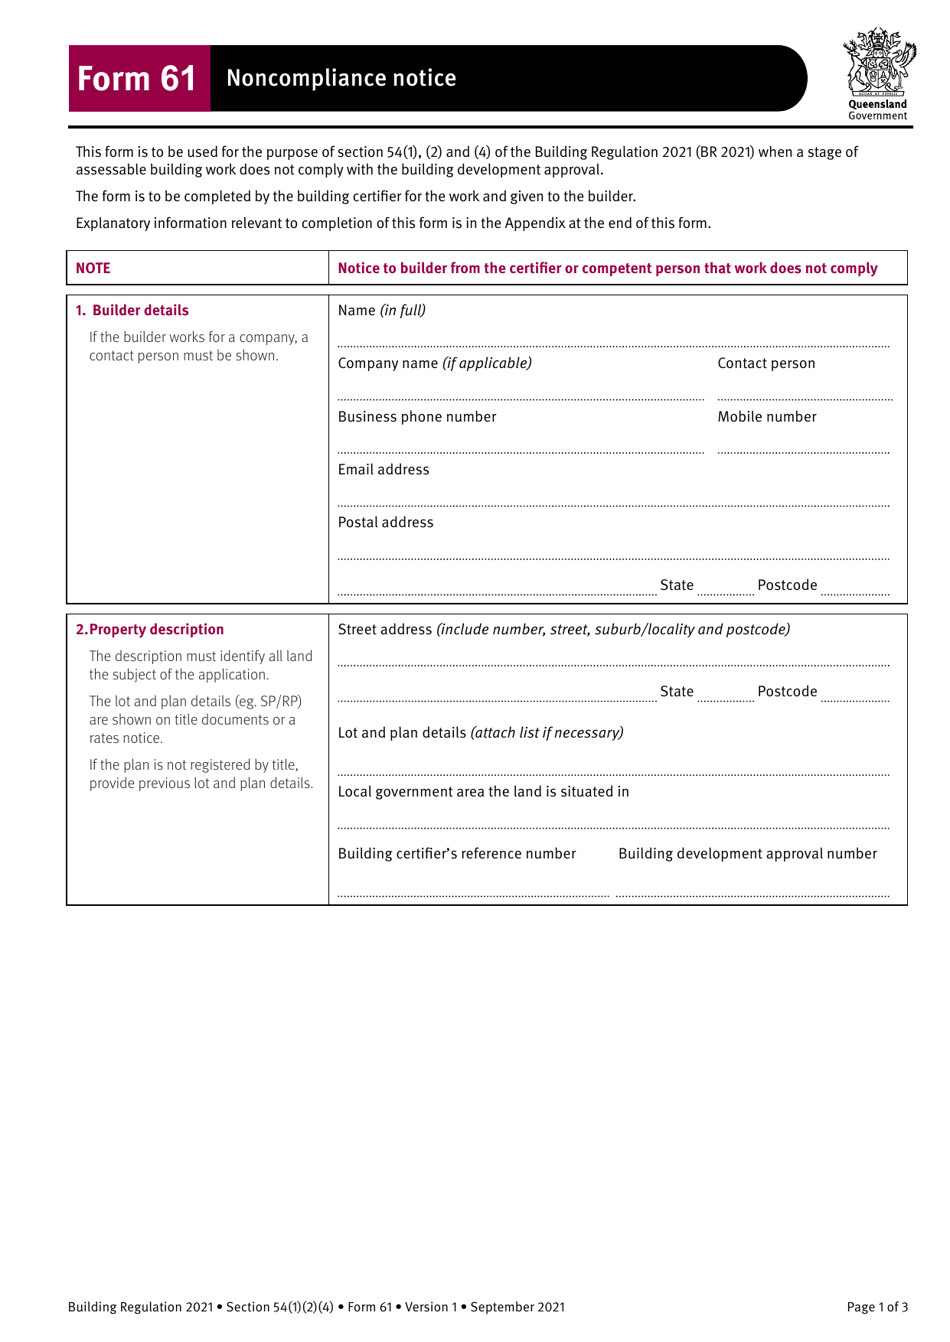 Form 61 Noncompliance Notice - Queensland, Australia, Page 1